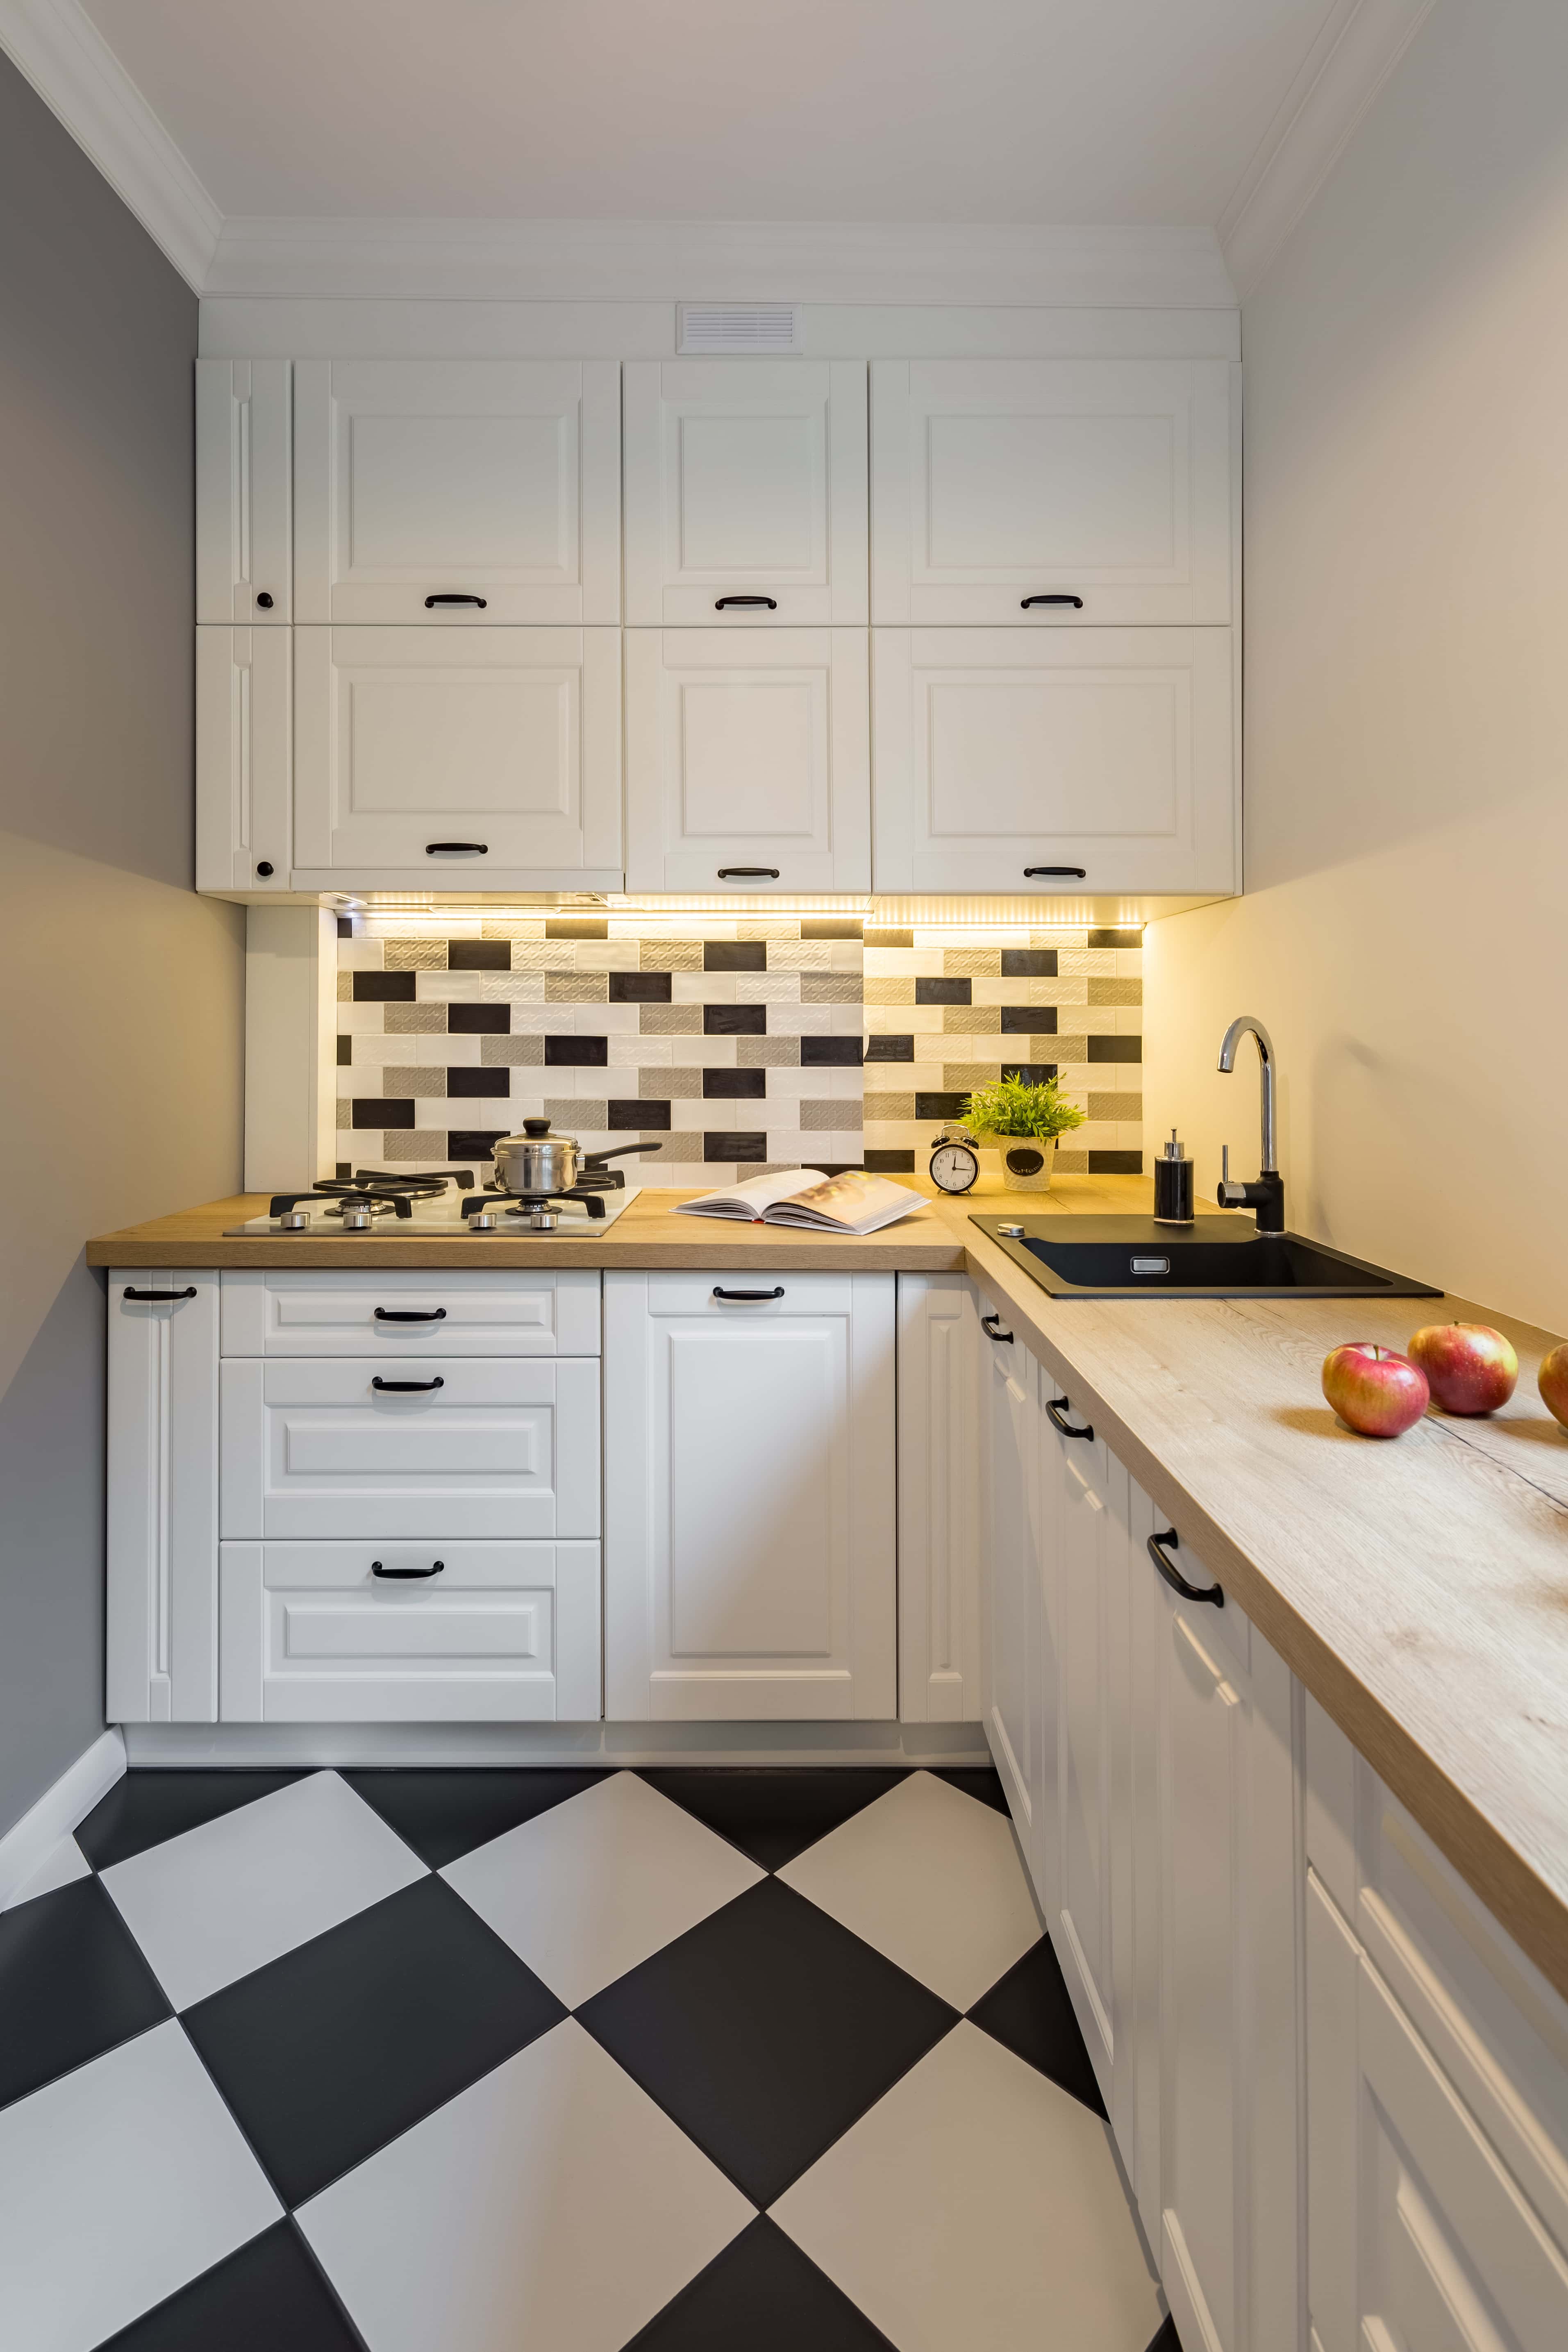 12 Trendy Modular Kitchen Design Ideas For Small Kitchens Homelane Blog,Modern Florida Landscaping Ideas For Front Of House